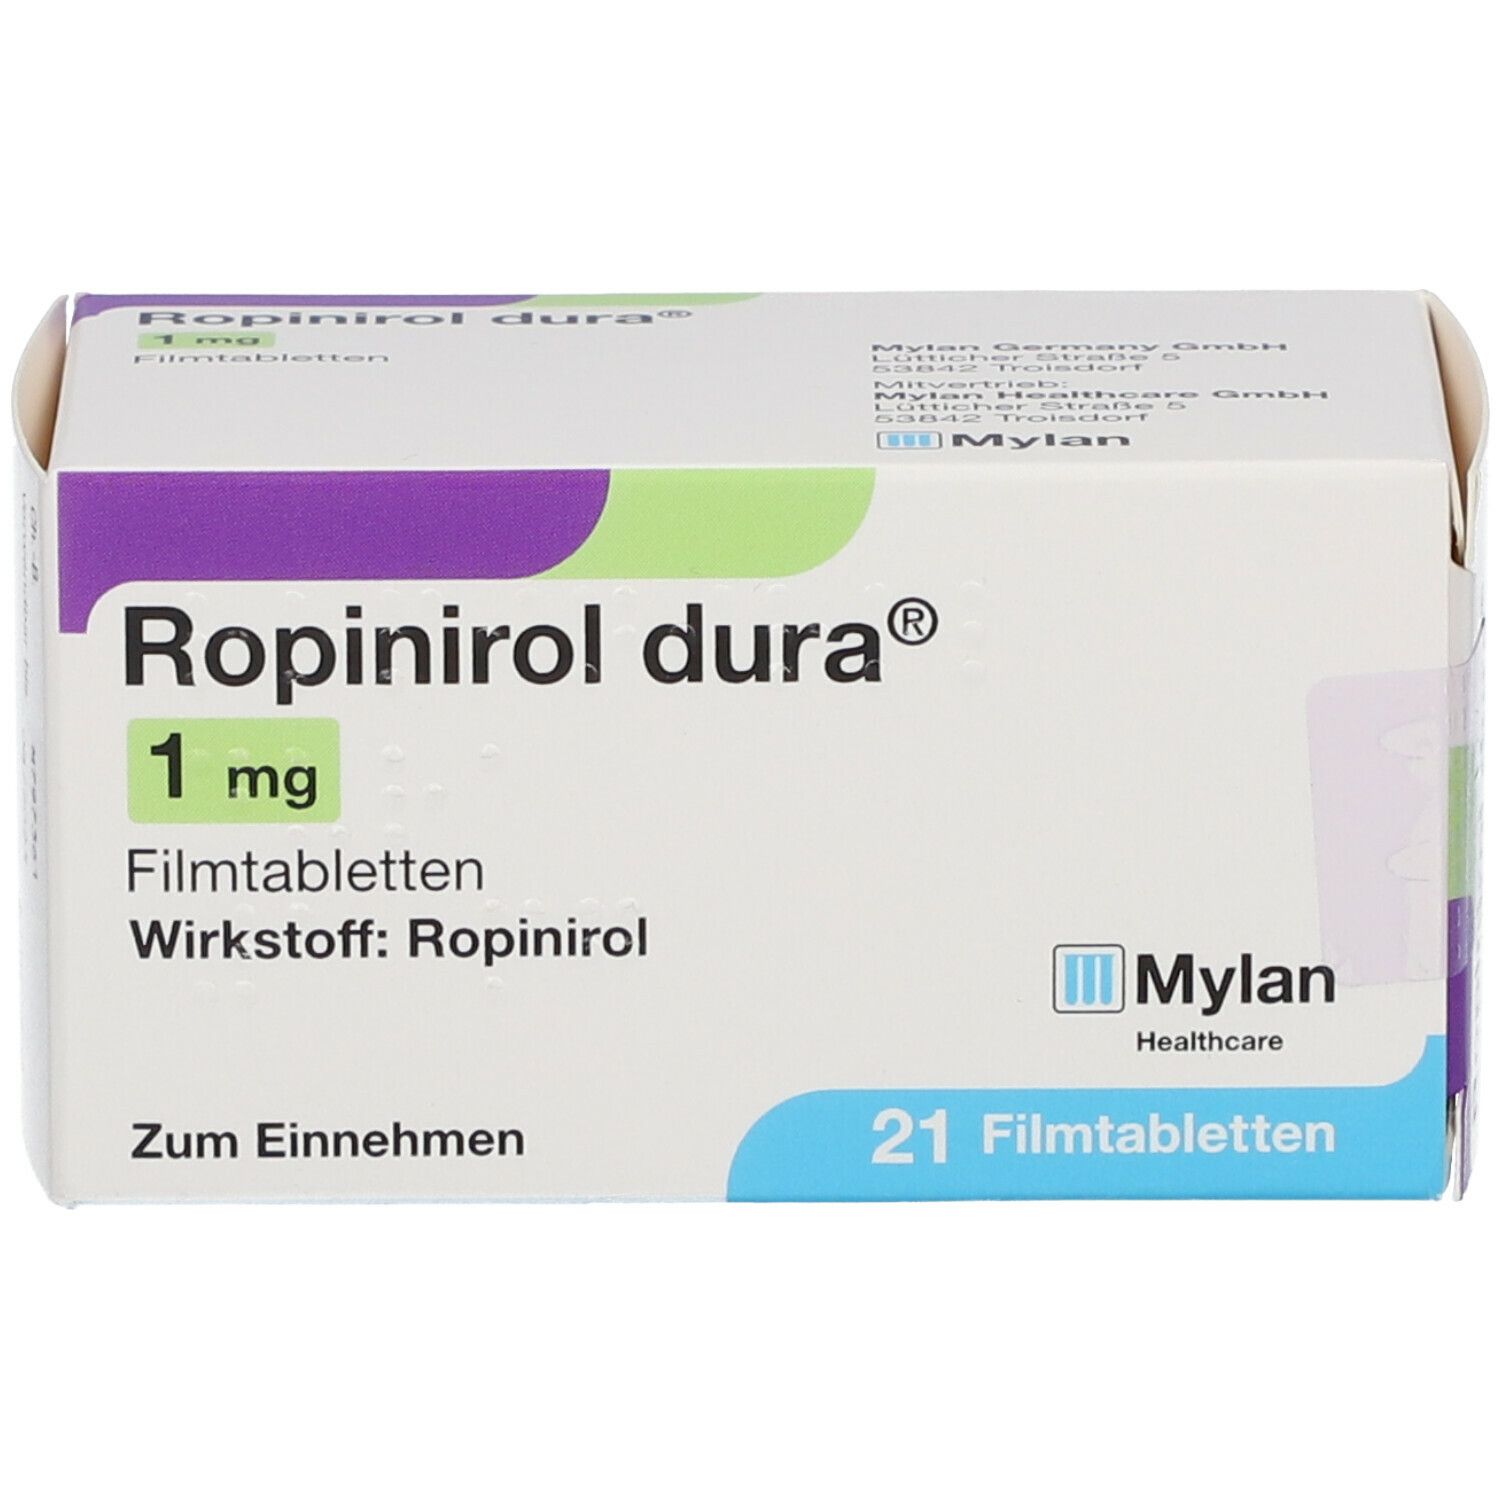 Ropinirol dura® 1 mg